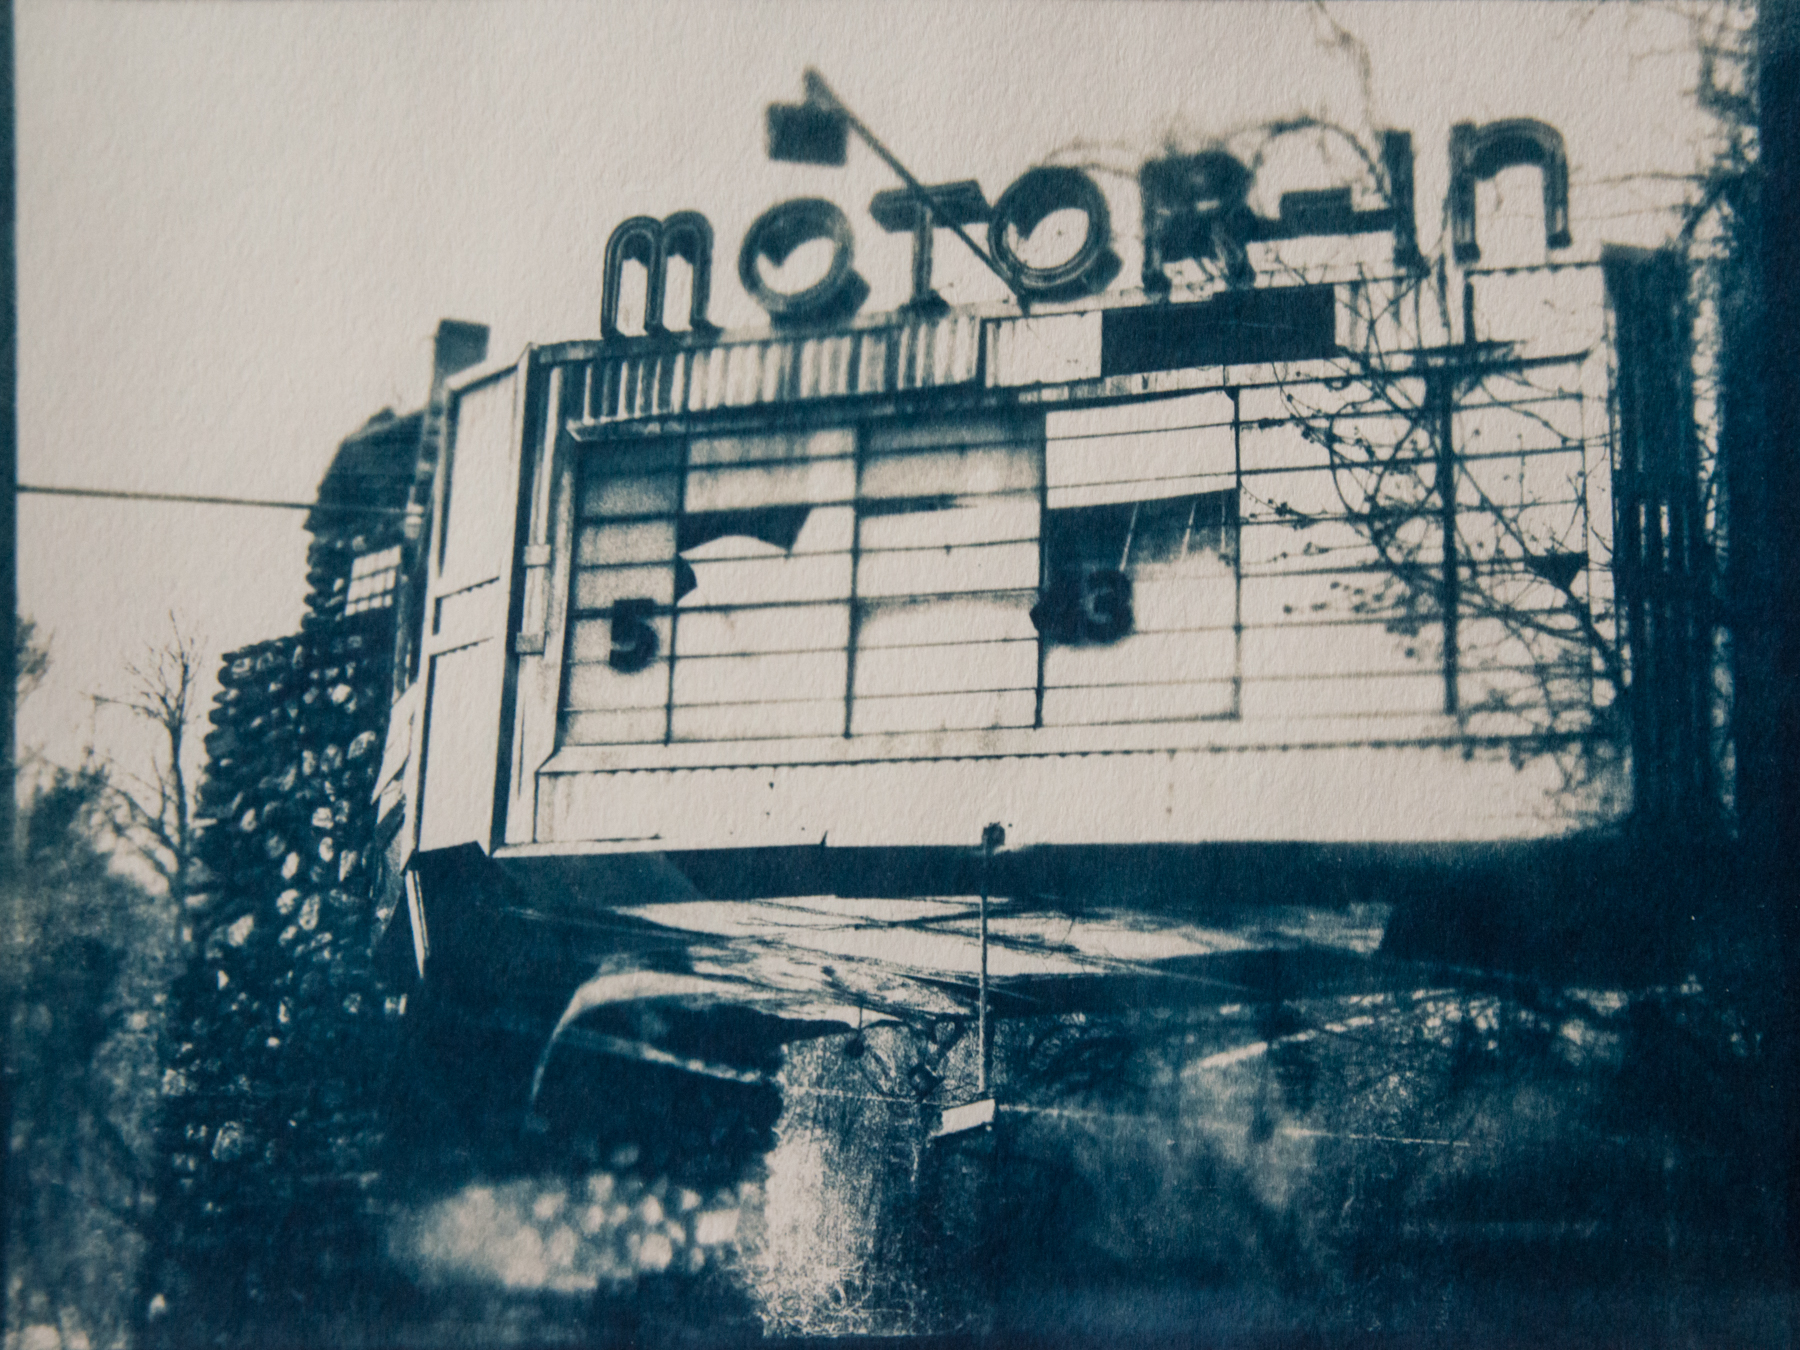  Marie Craig,  Motor-in 3,  cyanotype on paper, 9x12 